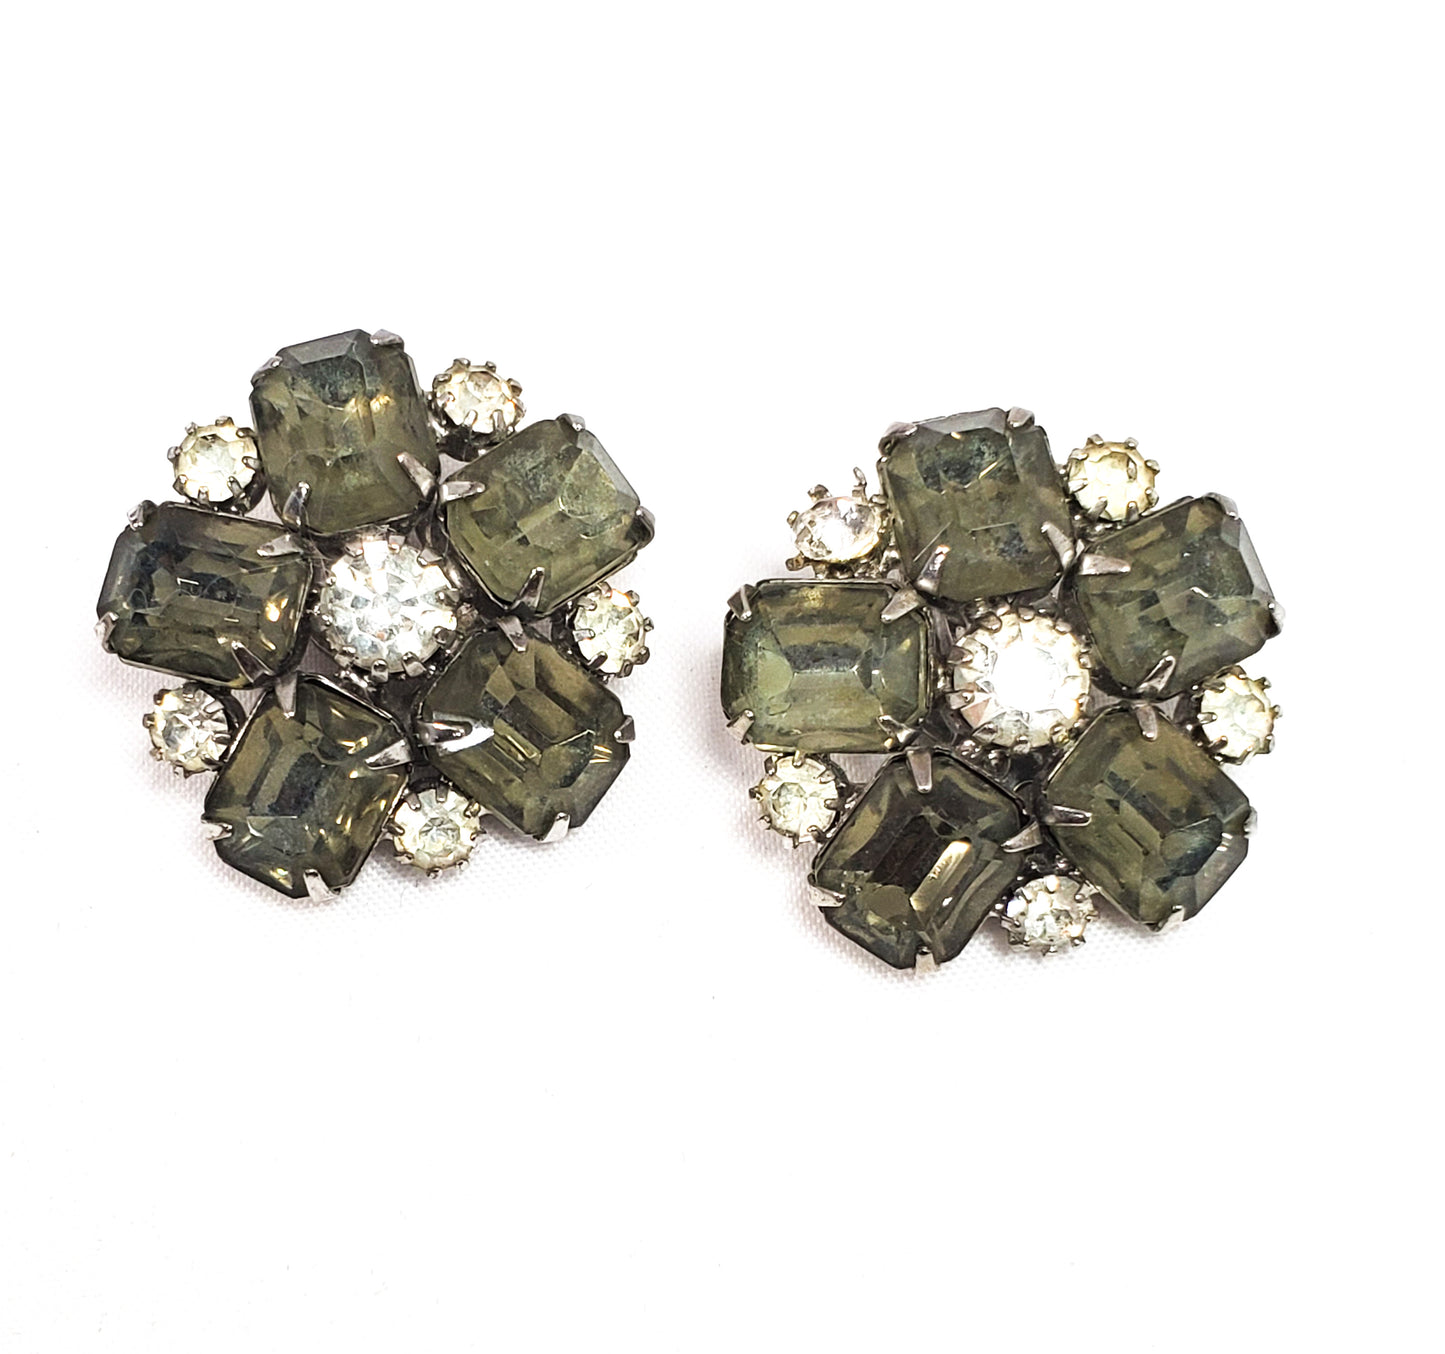 Smokey Grey flowers large rhinestone cluster clip on mid century earrings